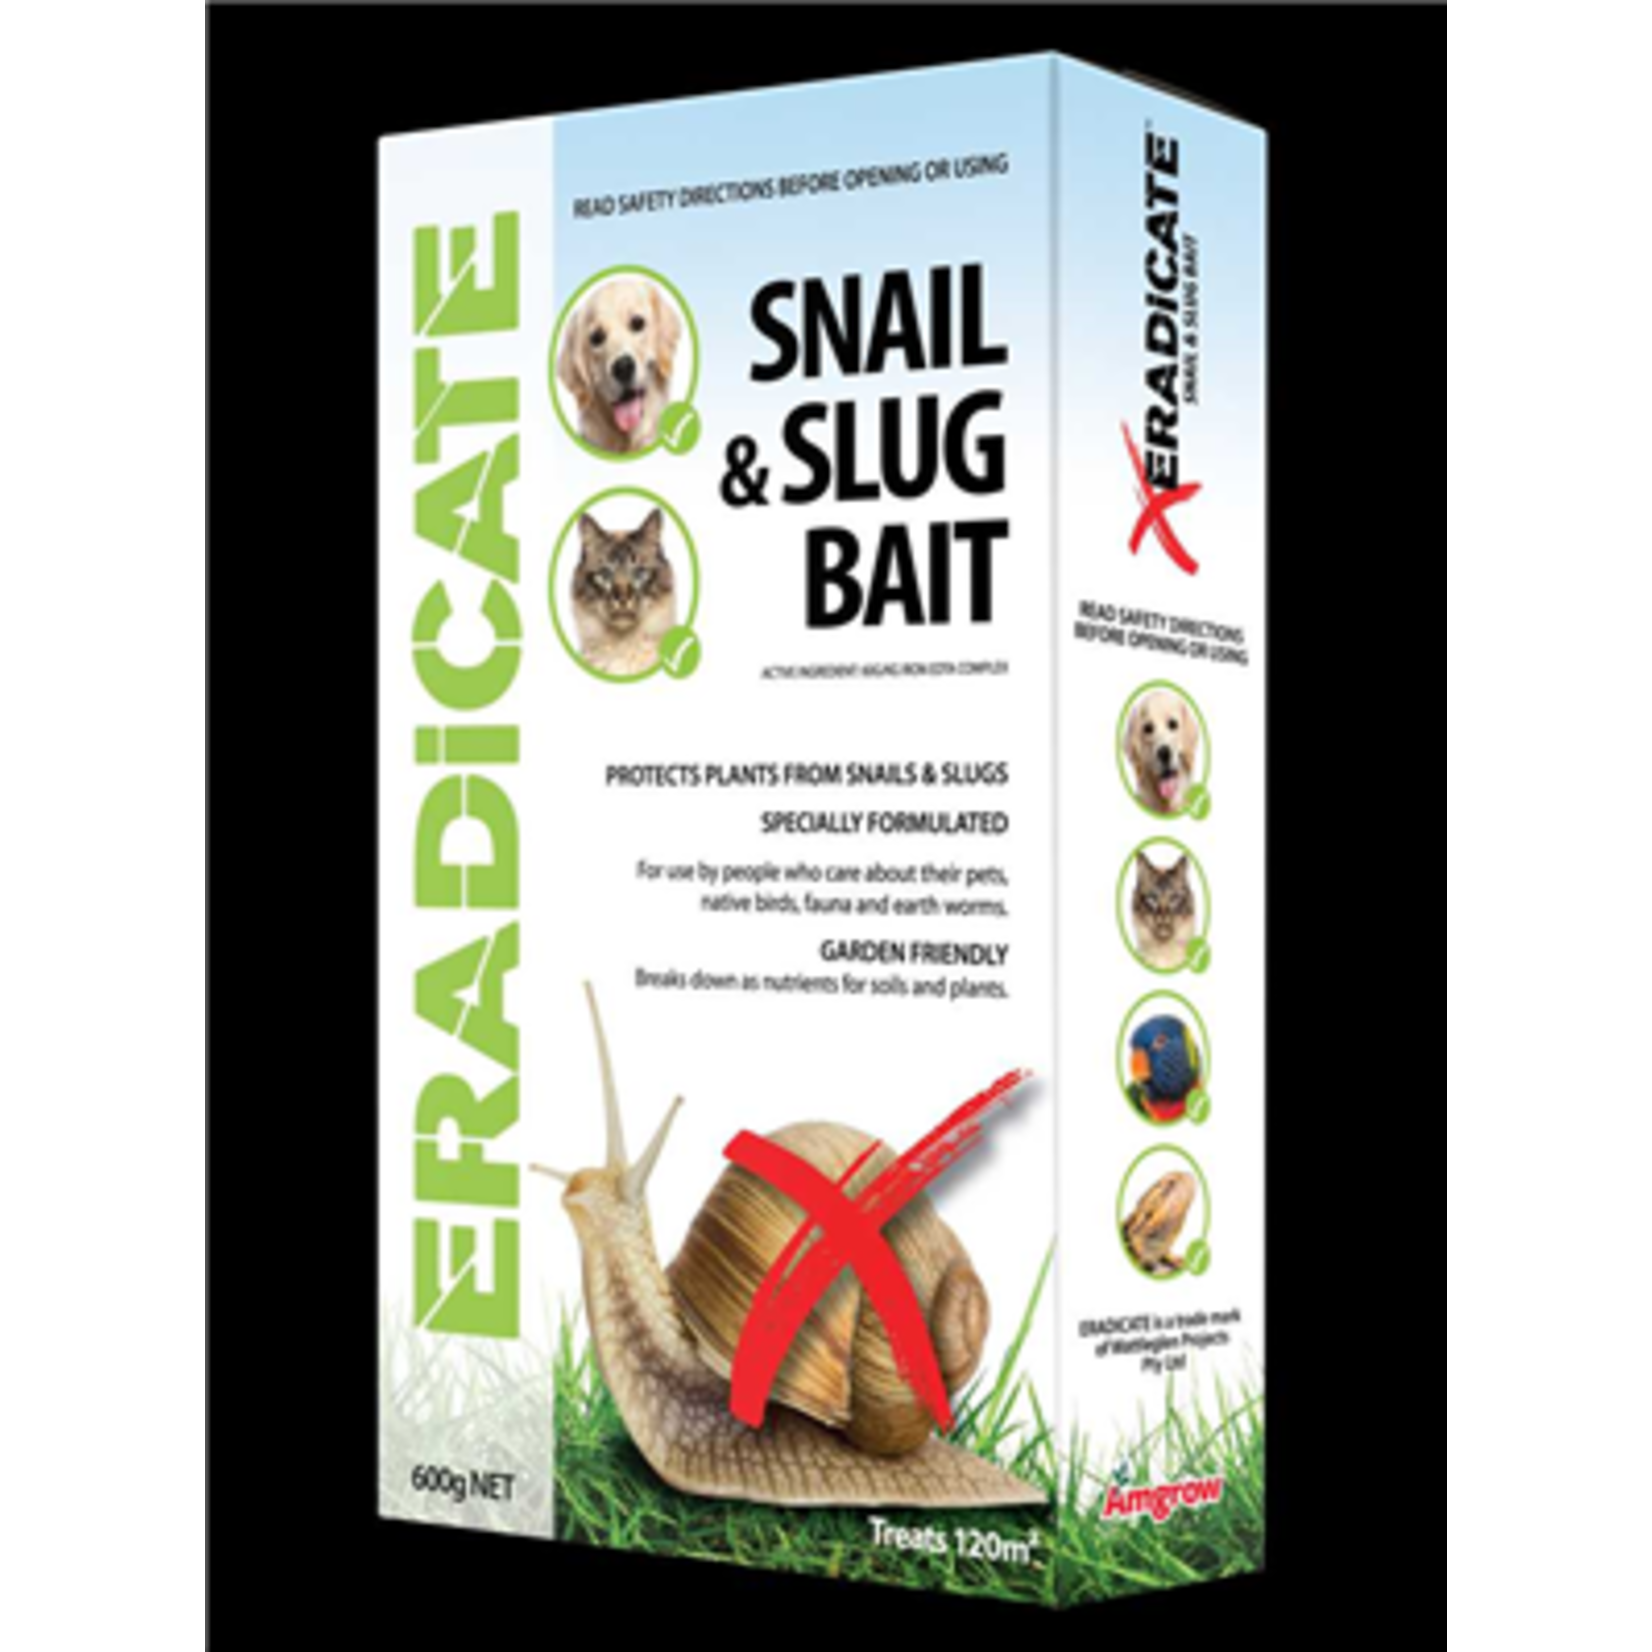 Amgrow Eradicate Snail & Slug Bait